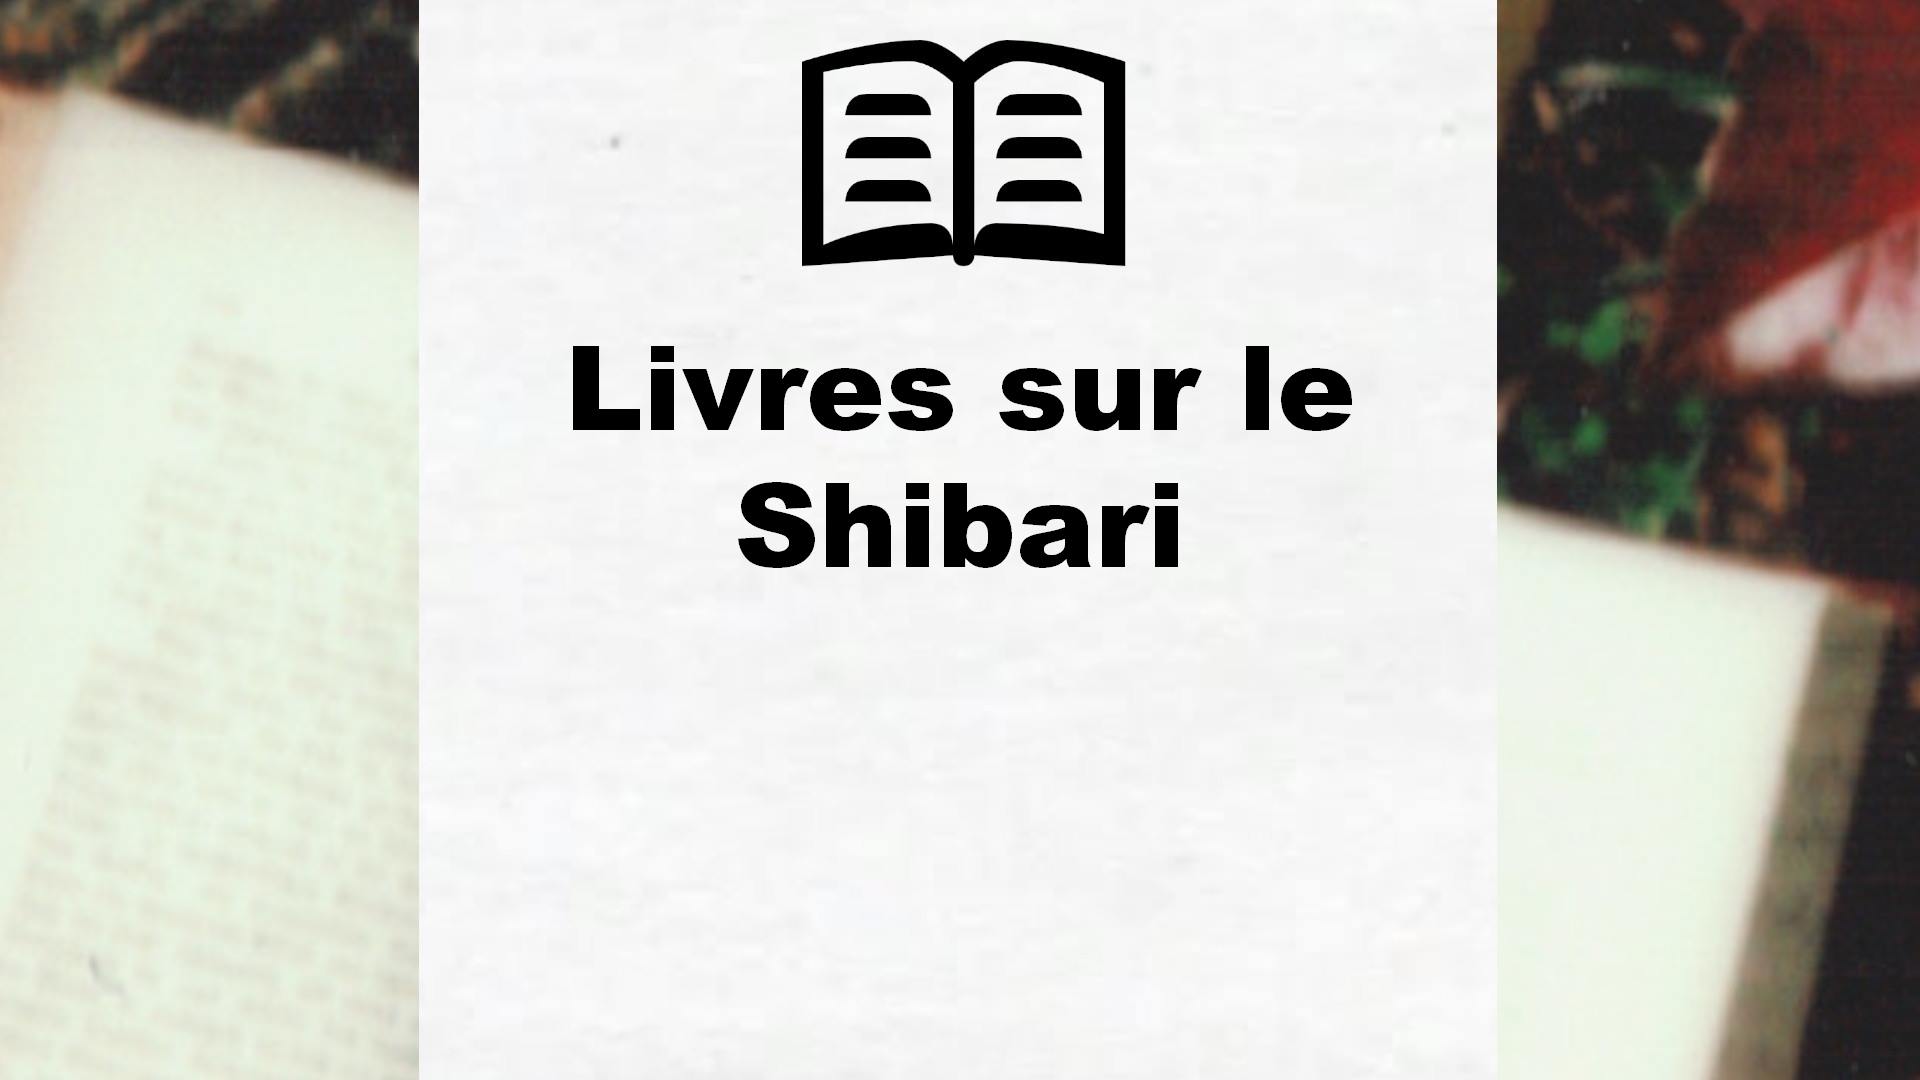 Livres sur le Shibari